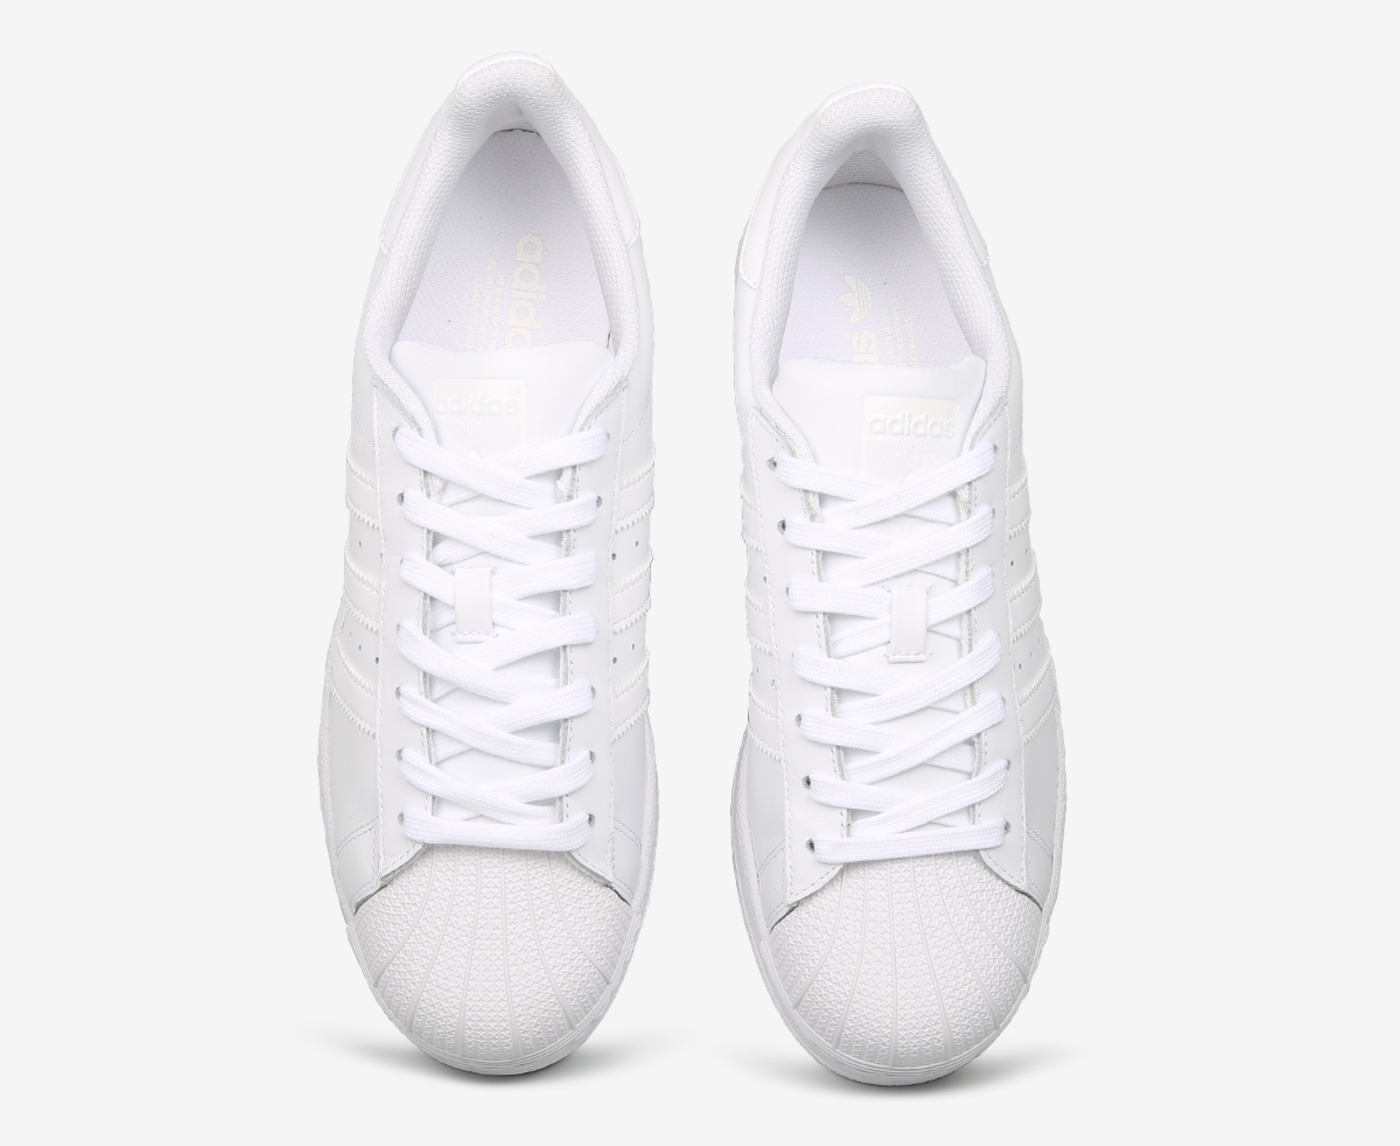 adidas Originals Superstar trainers in triple white